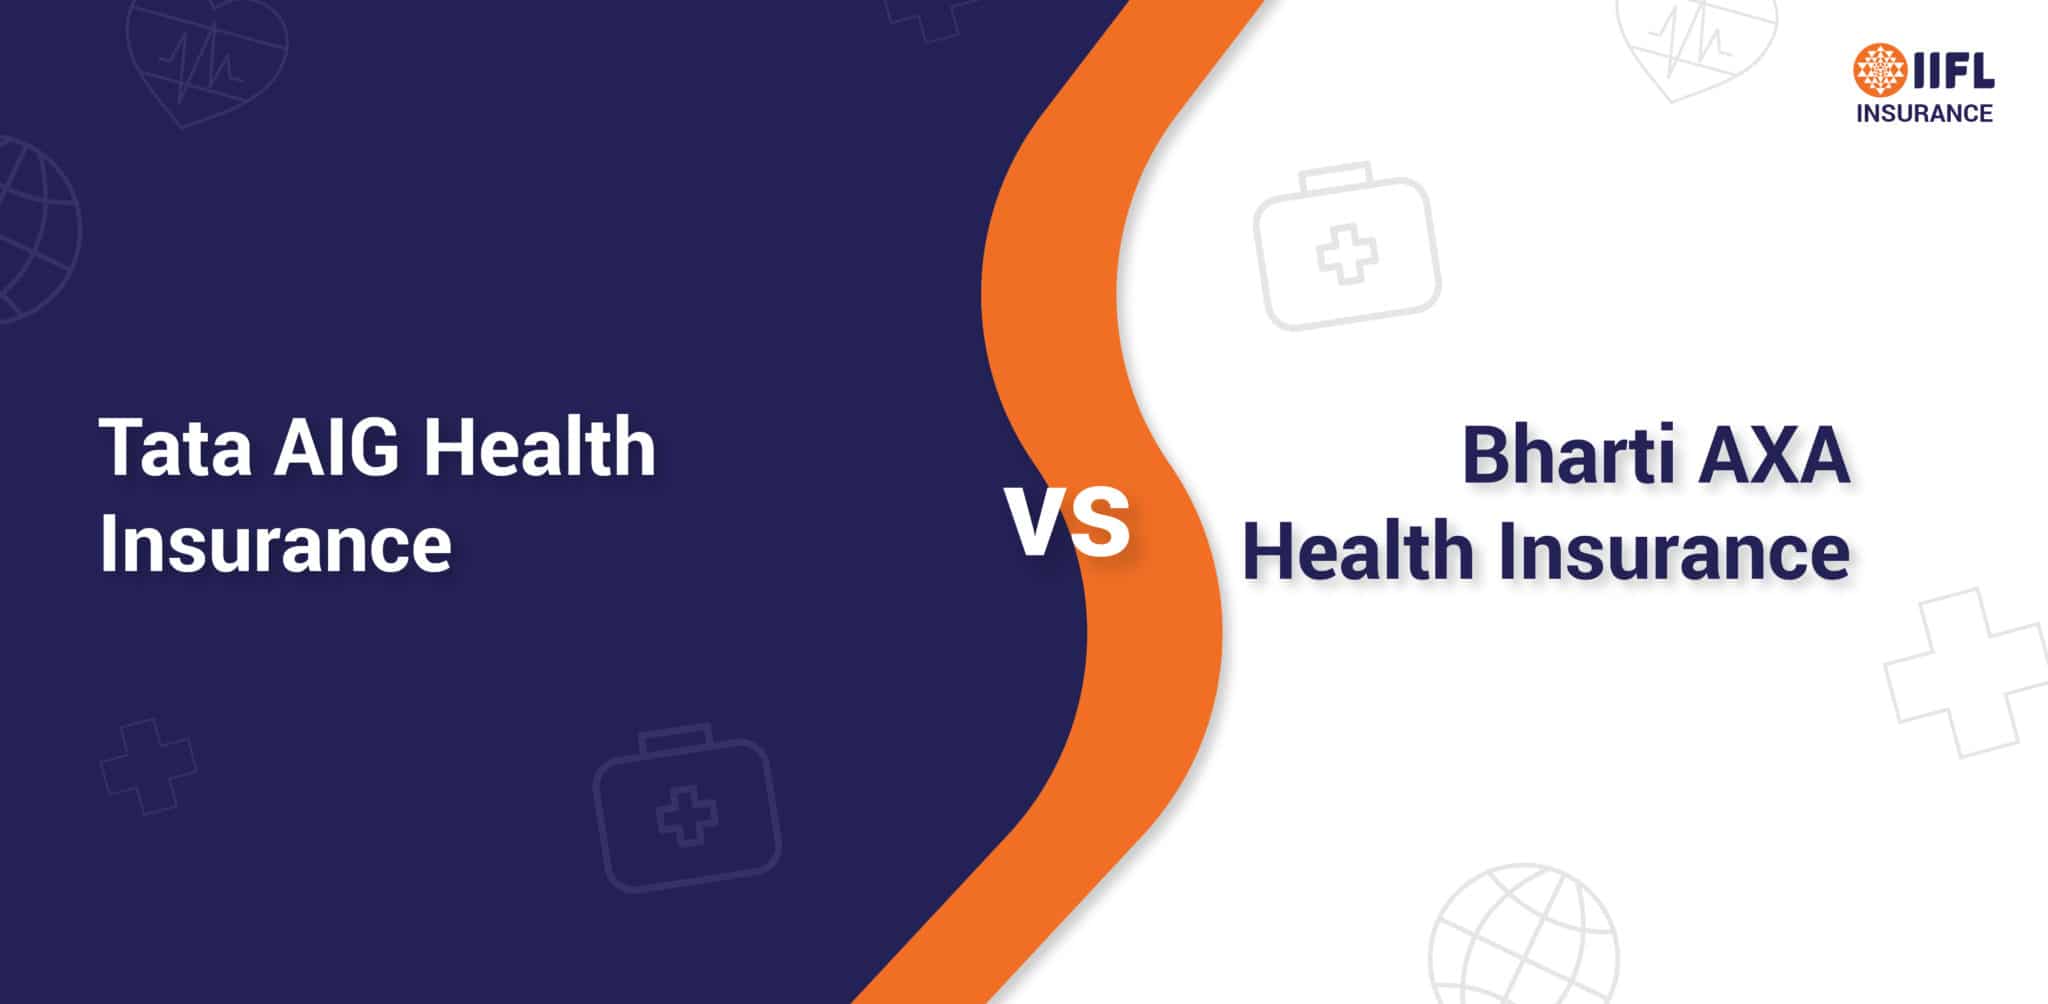 Tata AIG Health Insurance vs Bharti AXA Health Insurance